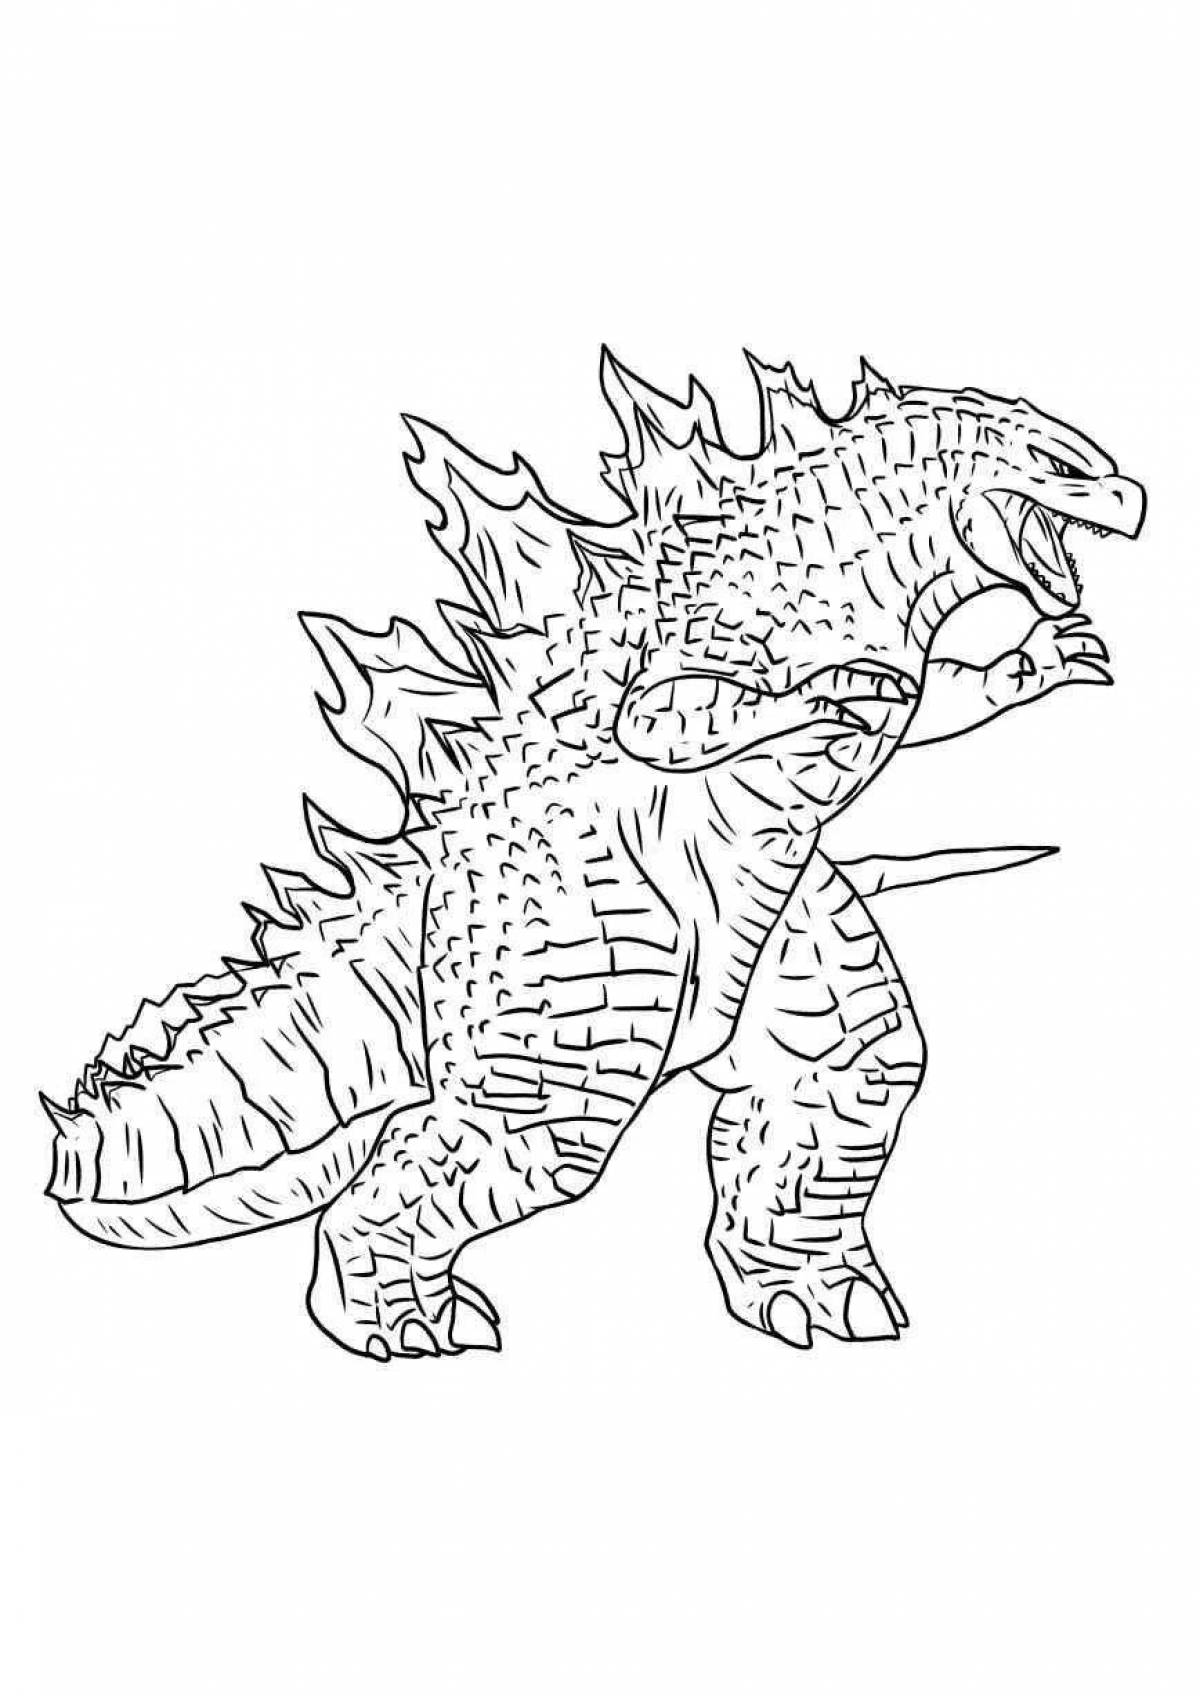 Godzilla fantasy coloring book for boys